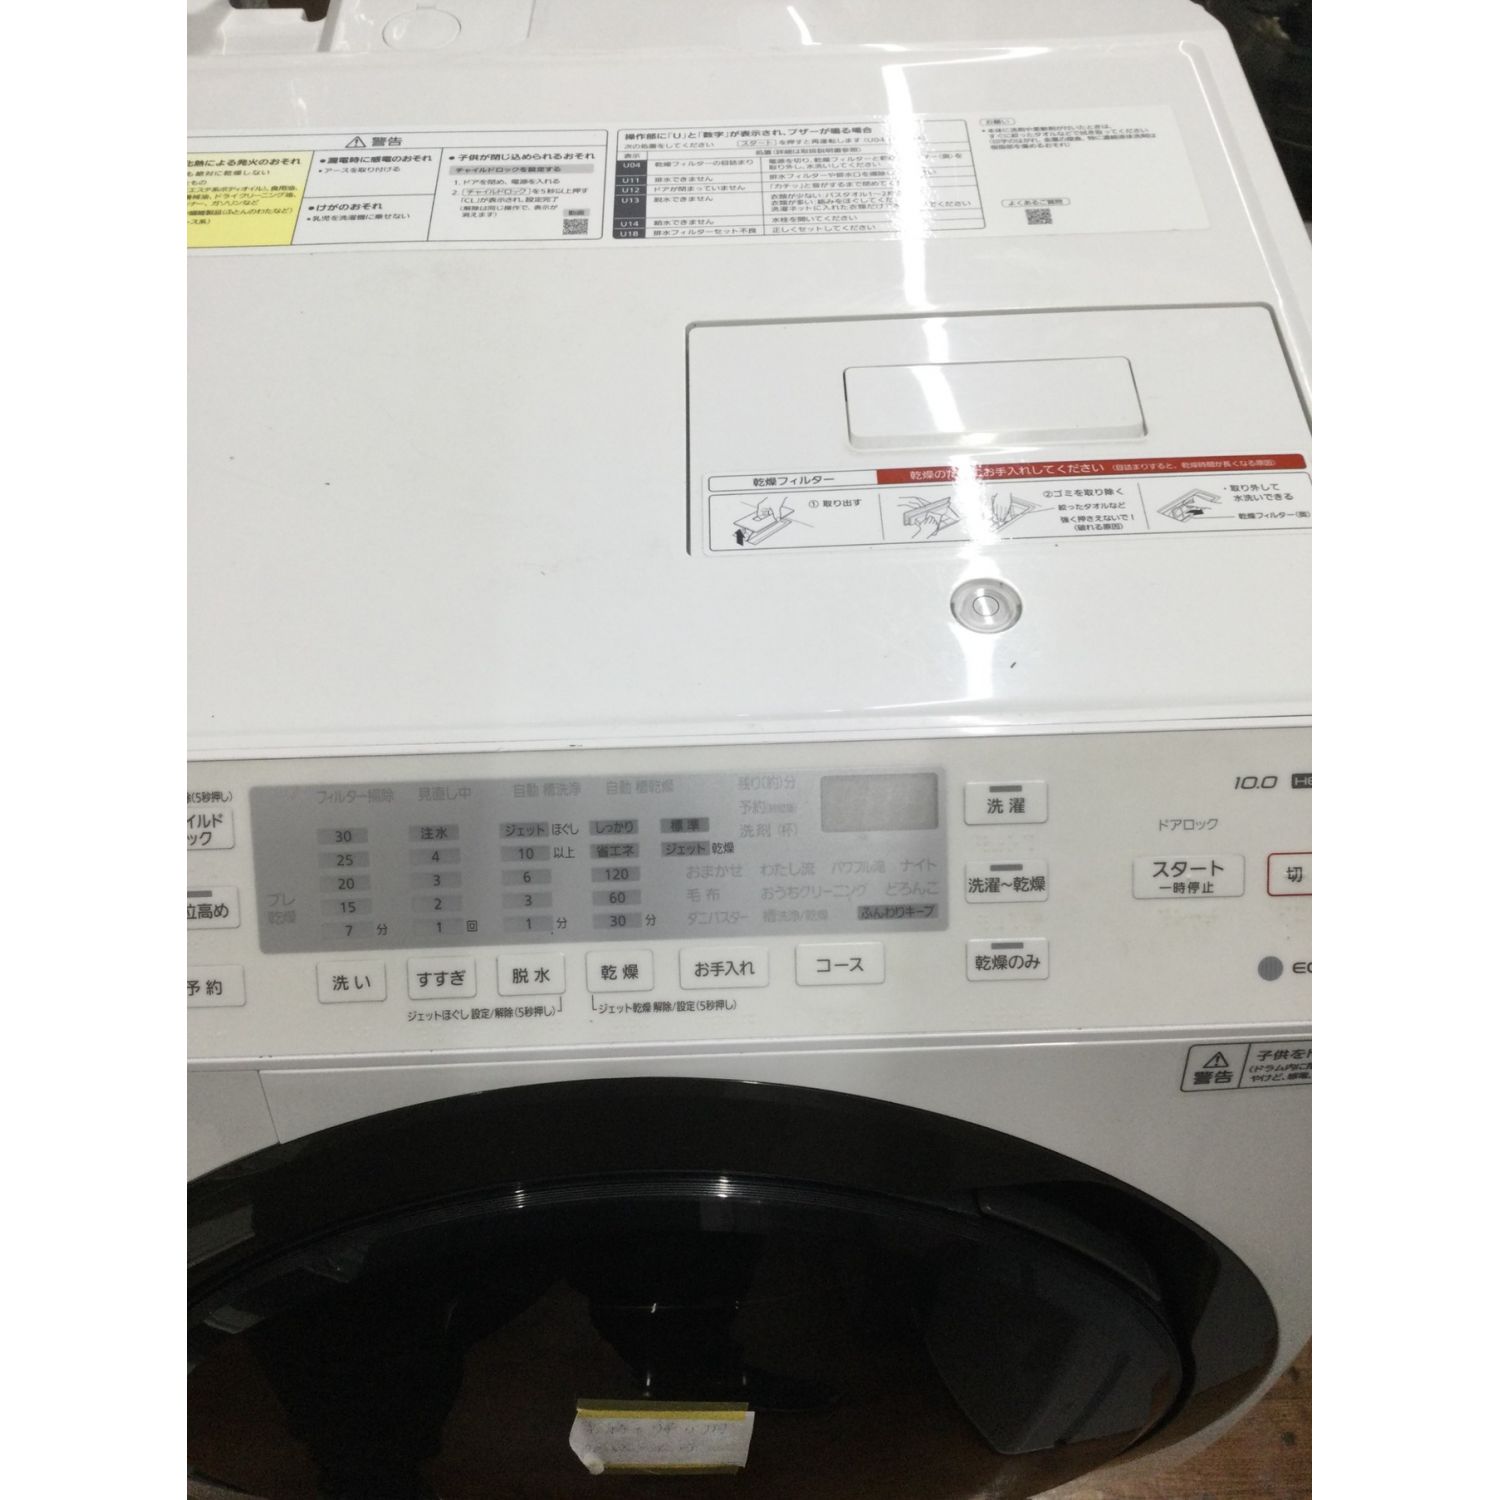 Panasonic (パナソニック) ドラム式洗濯乾燥機 NA-VX300AL 2019年製